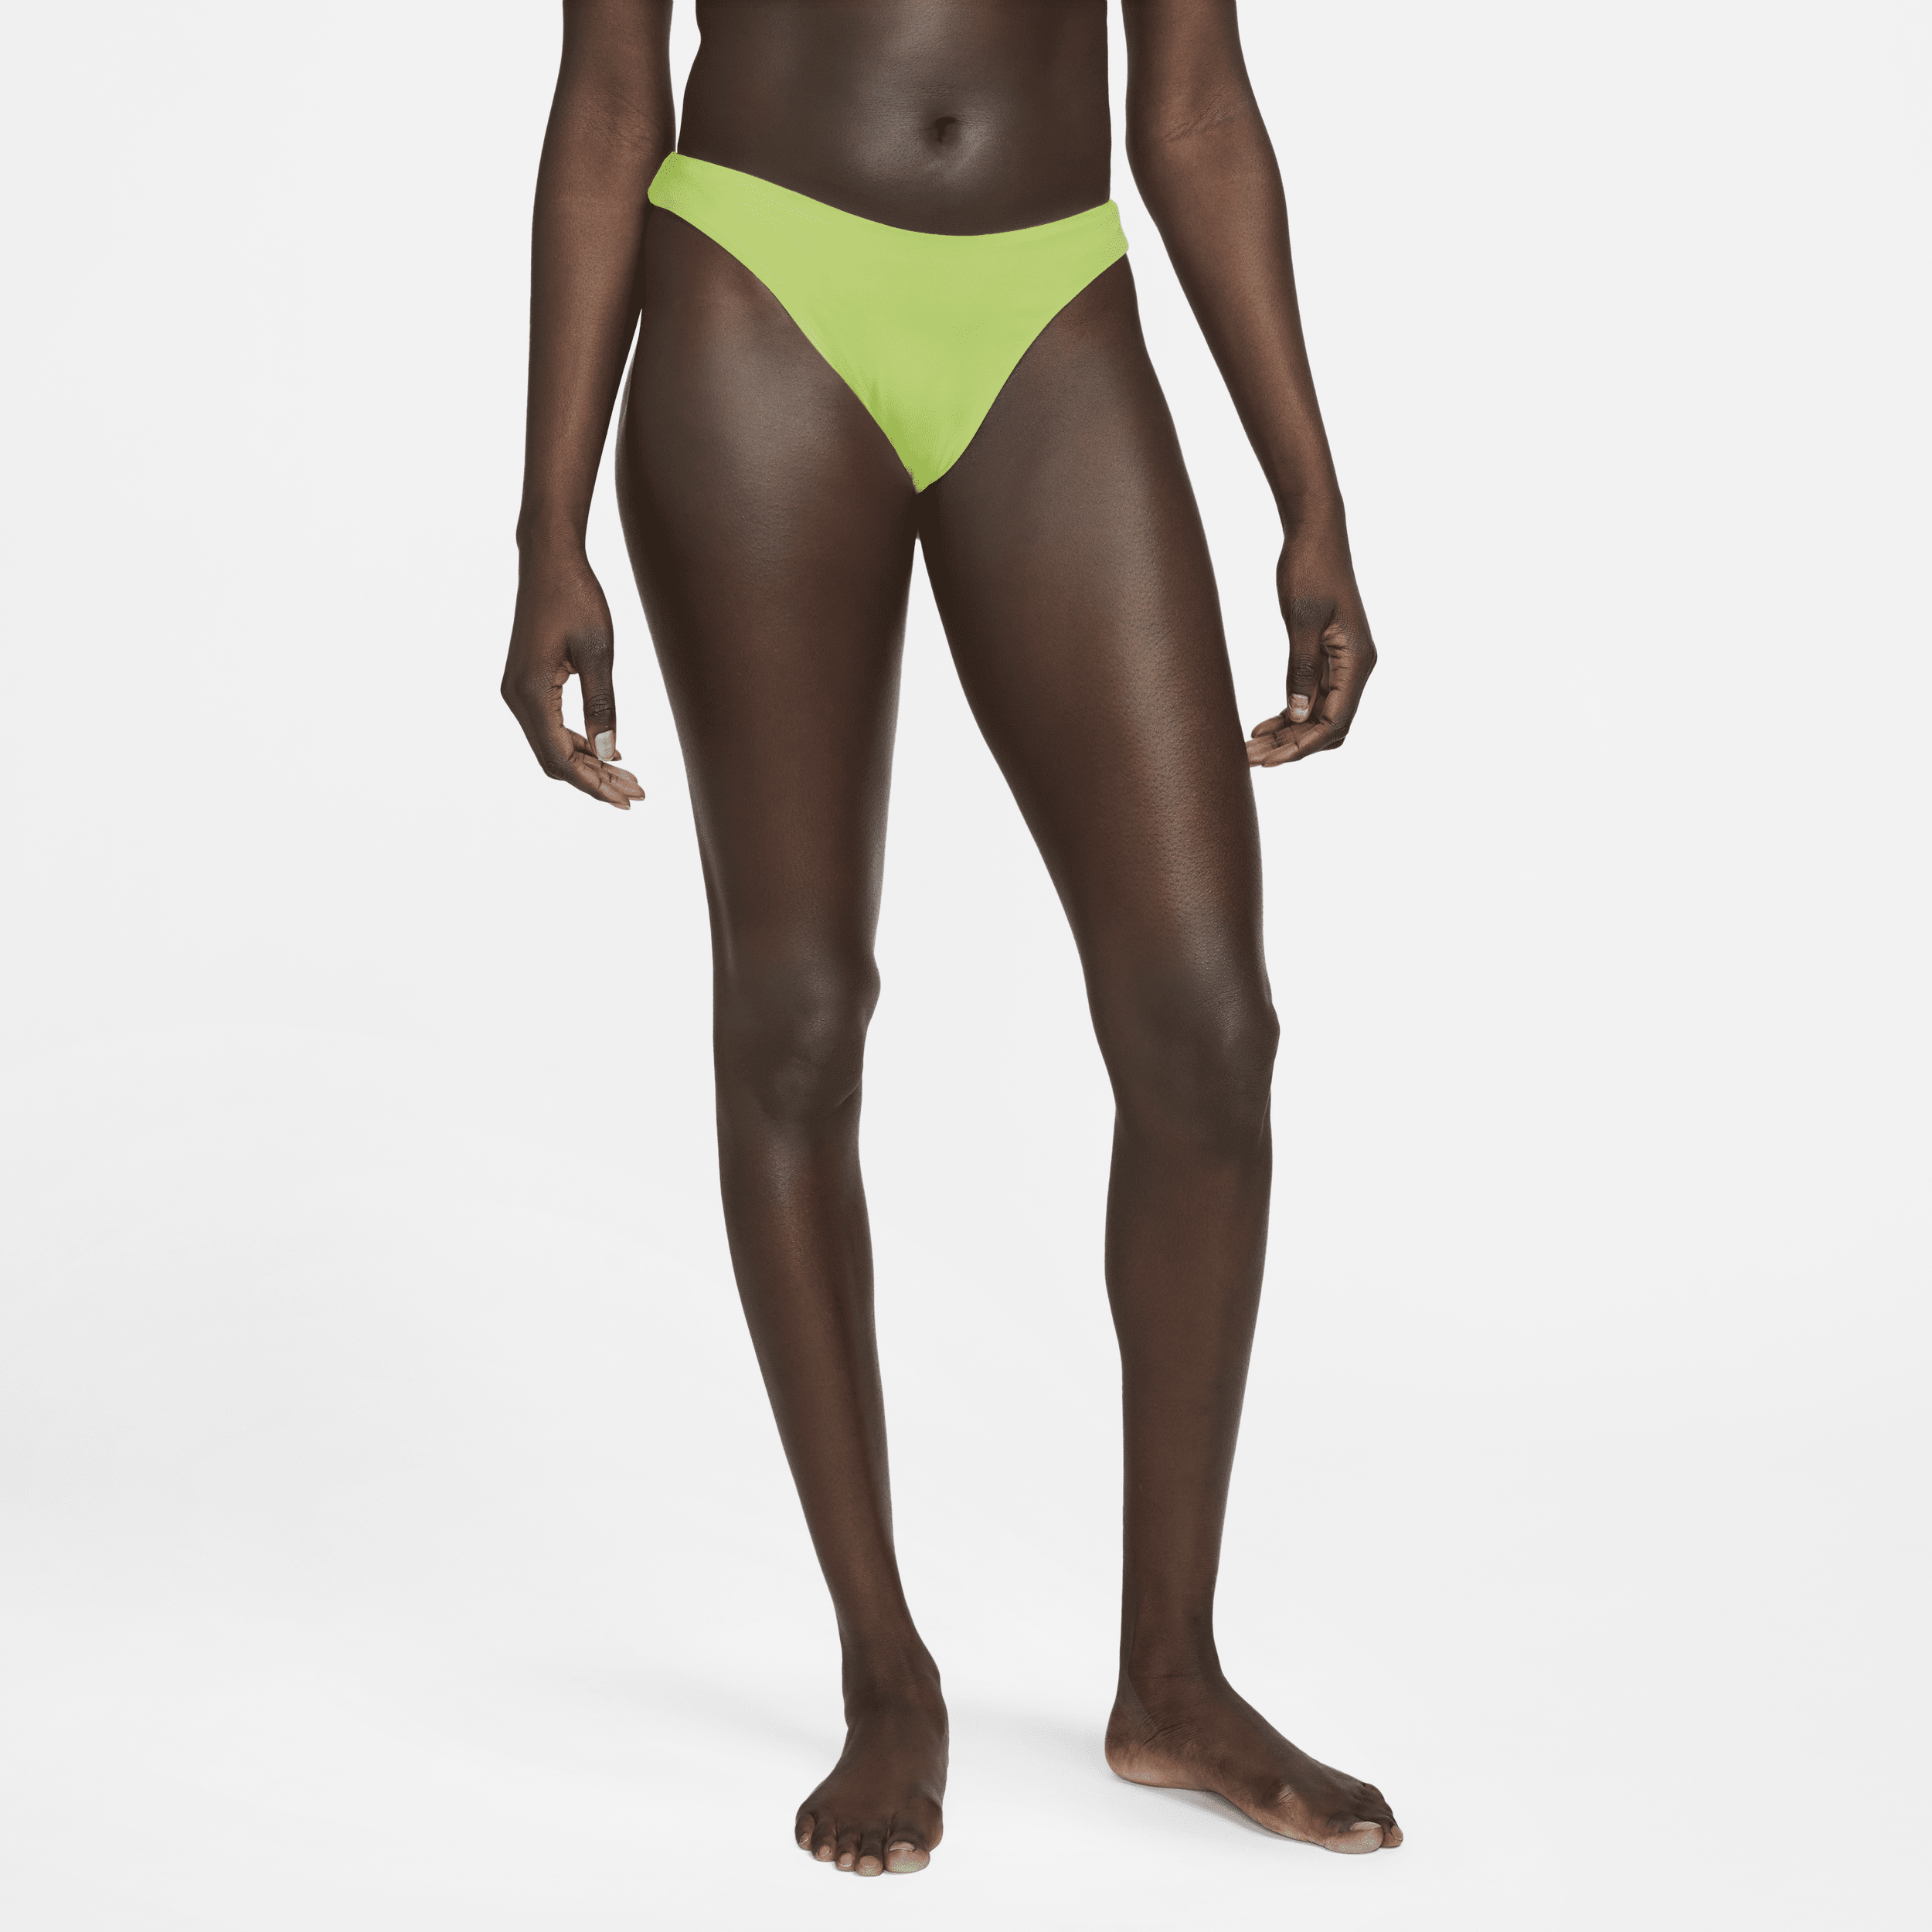 NIKE SWIM Nike Essential Sling Bikini Bottom - Bikini bottoms